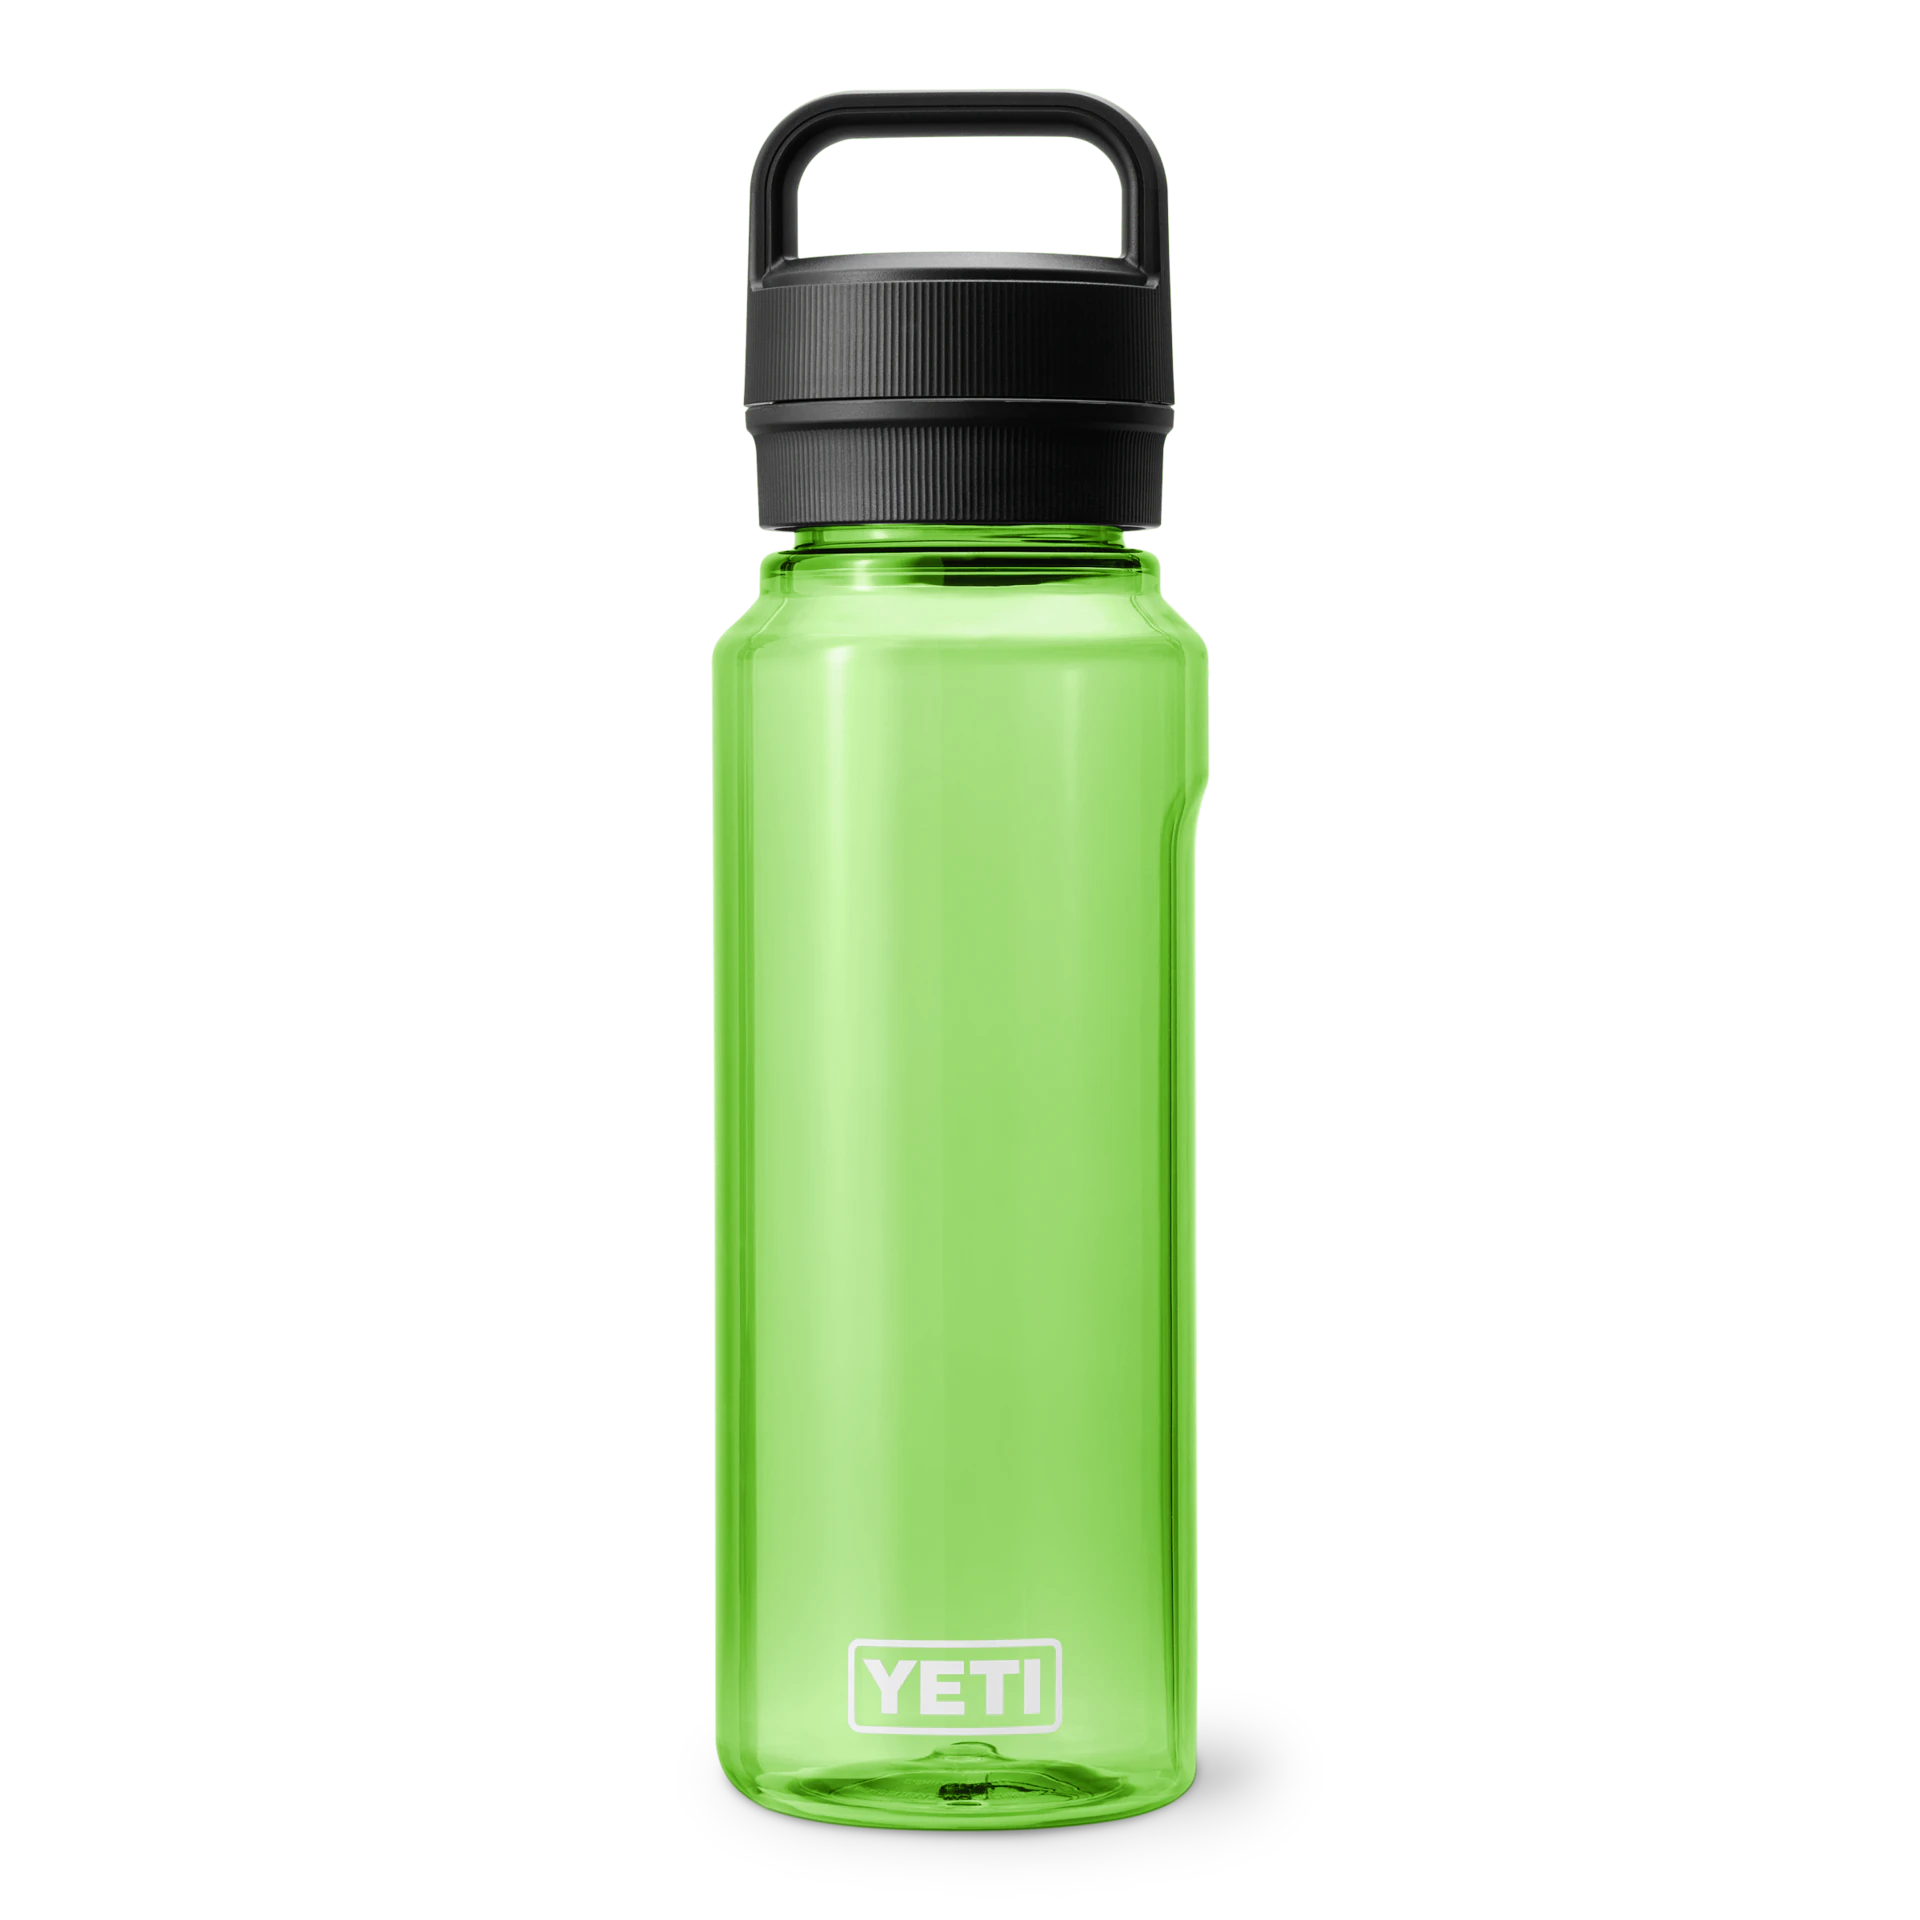 YETI- Canopy Green Yonder 1L/34oz Water Bottle